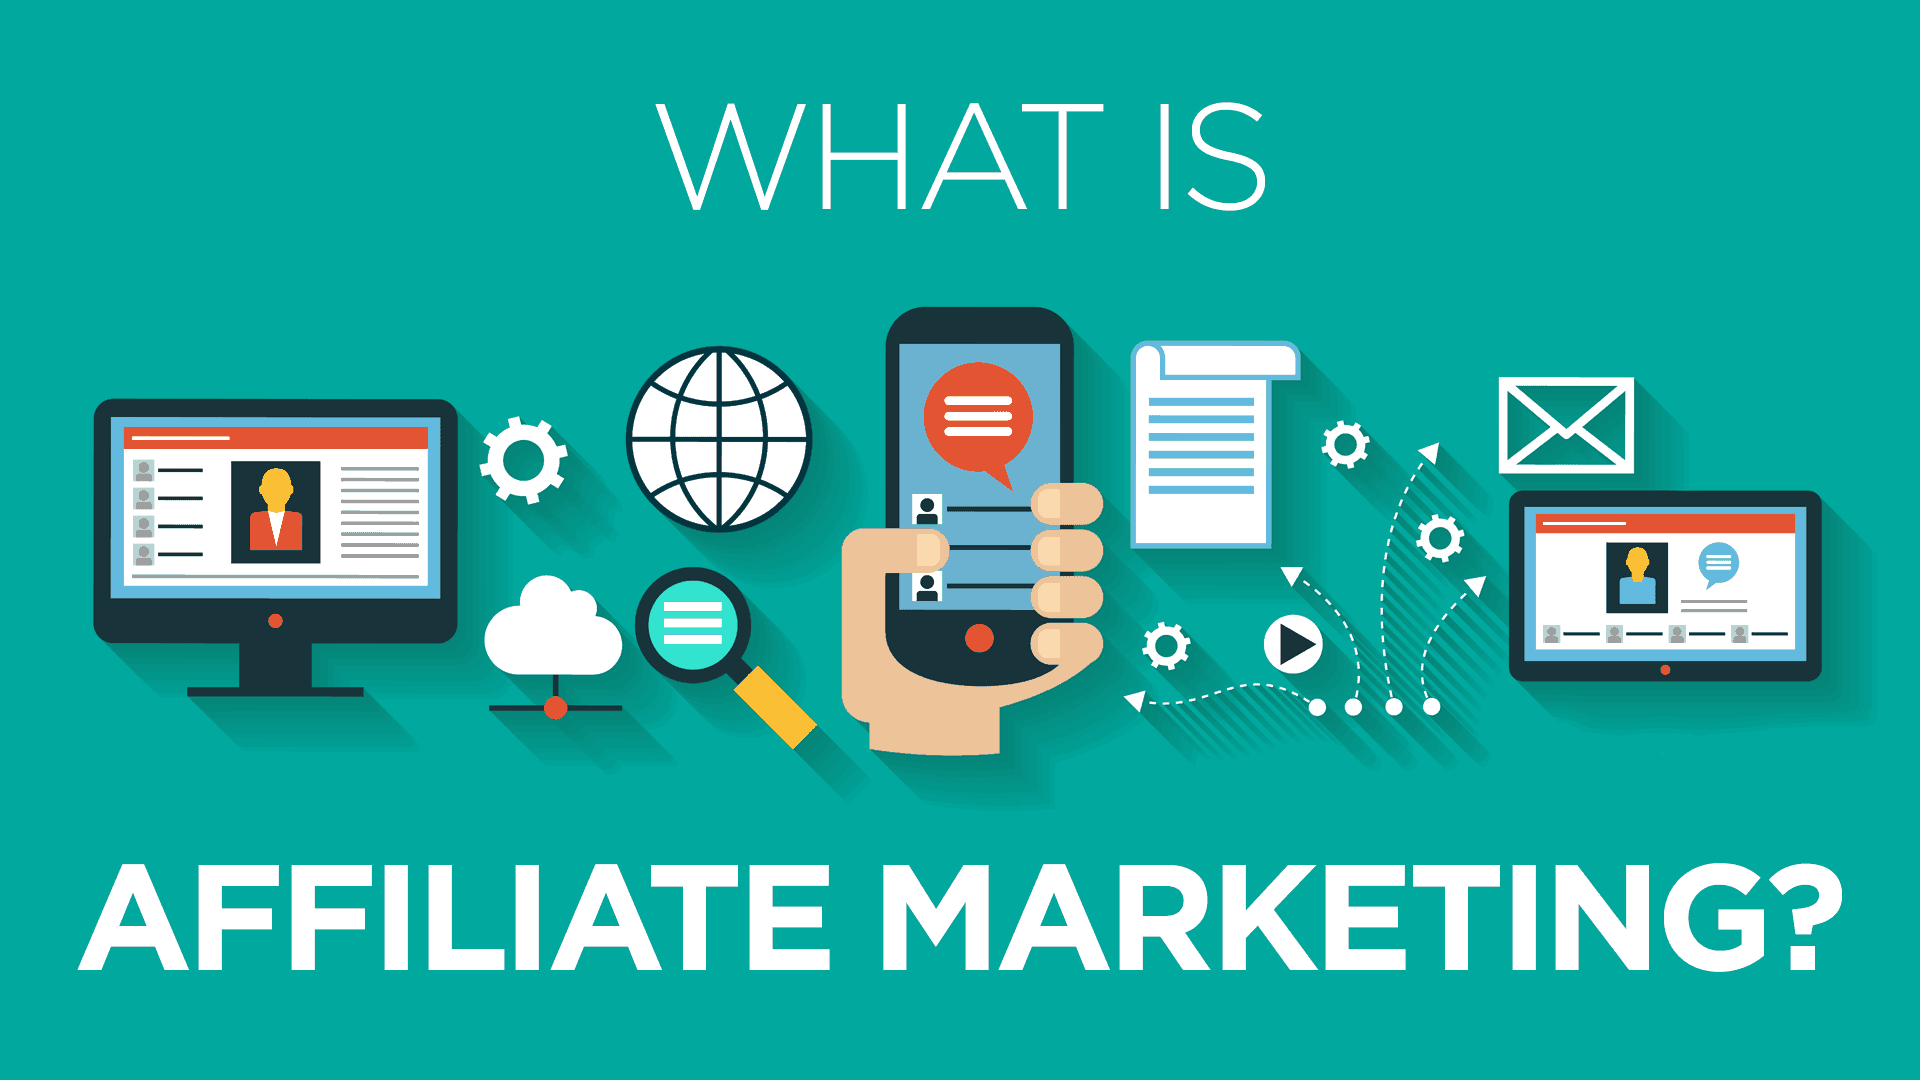 Why affiliate marketing?